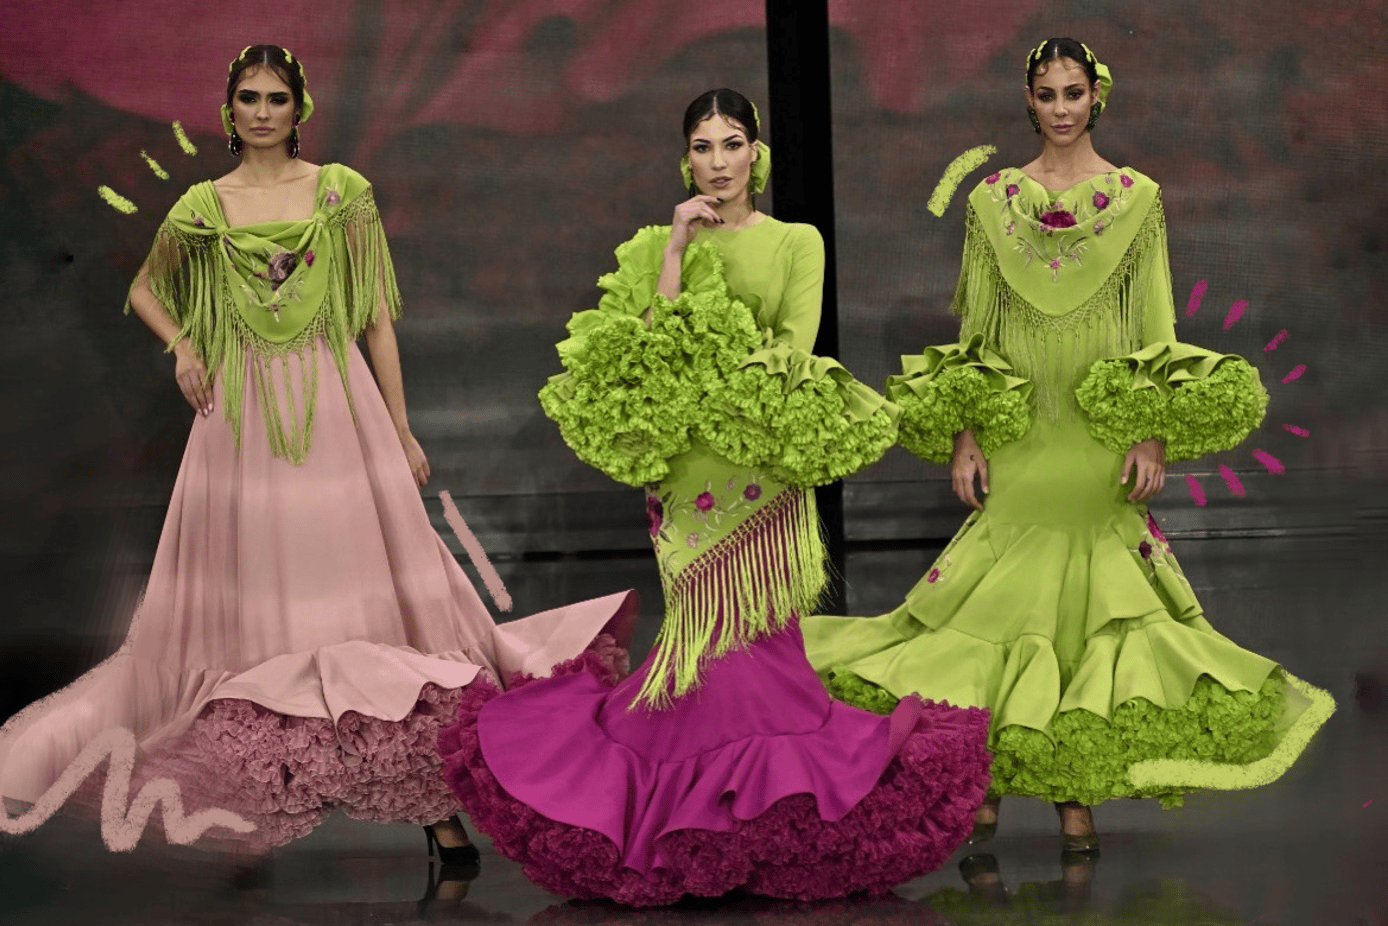 Radioactivo madera Fangoso De la pasarela a la Feria, las tendencias en moda flamenca según SIMOF 2023